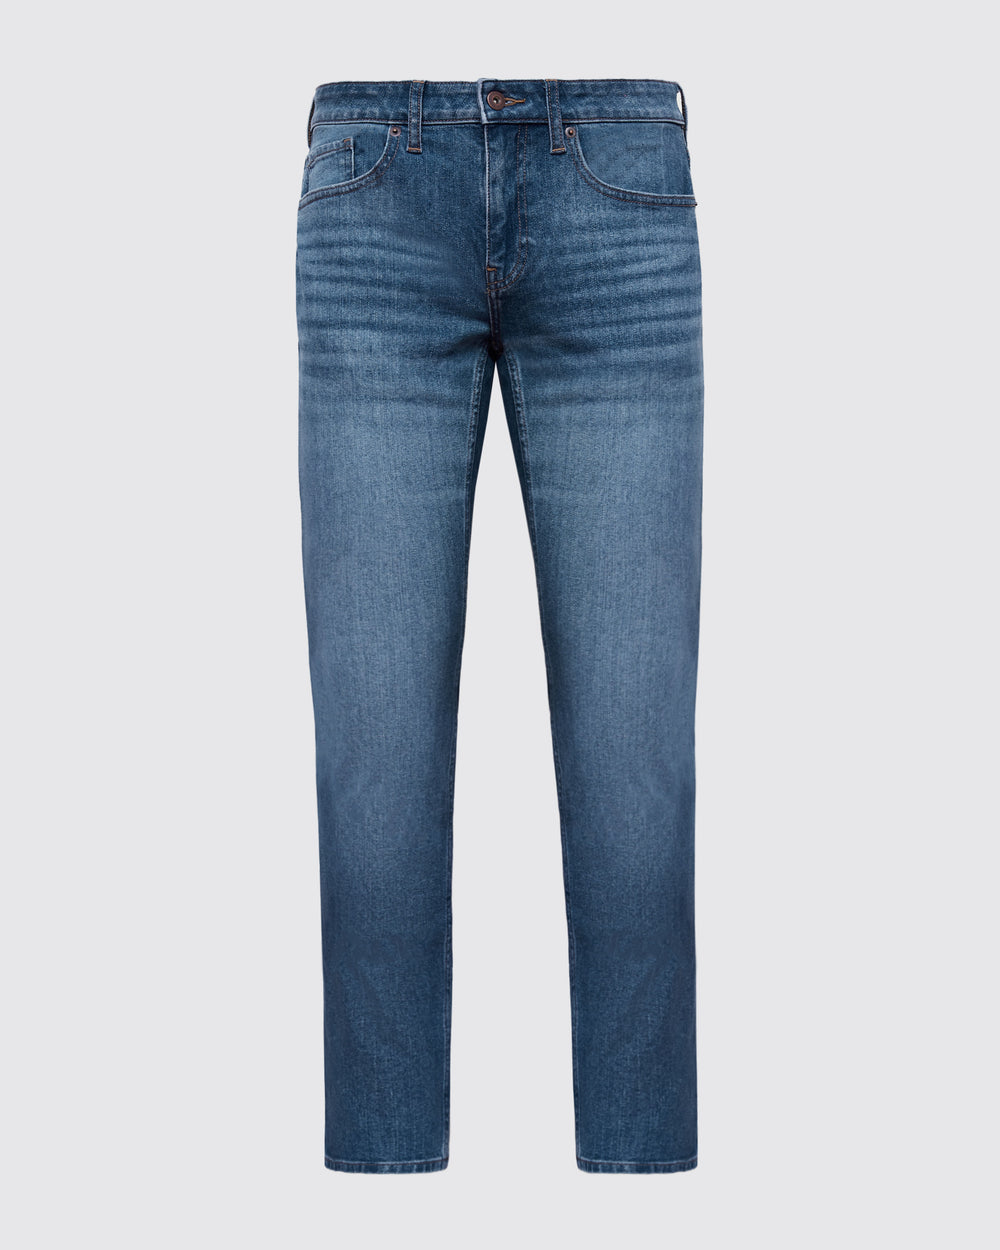 DTT stretch slim fit jeans in indigo